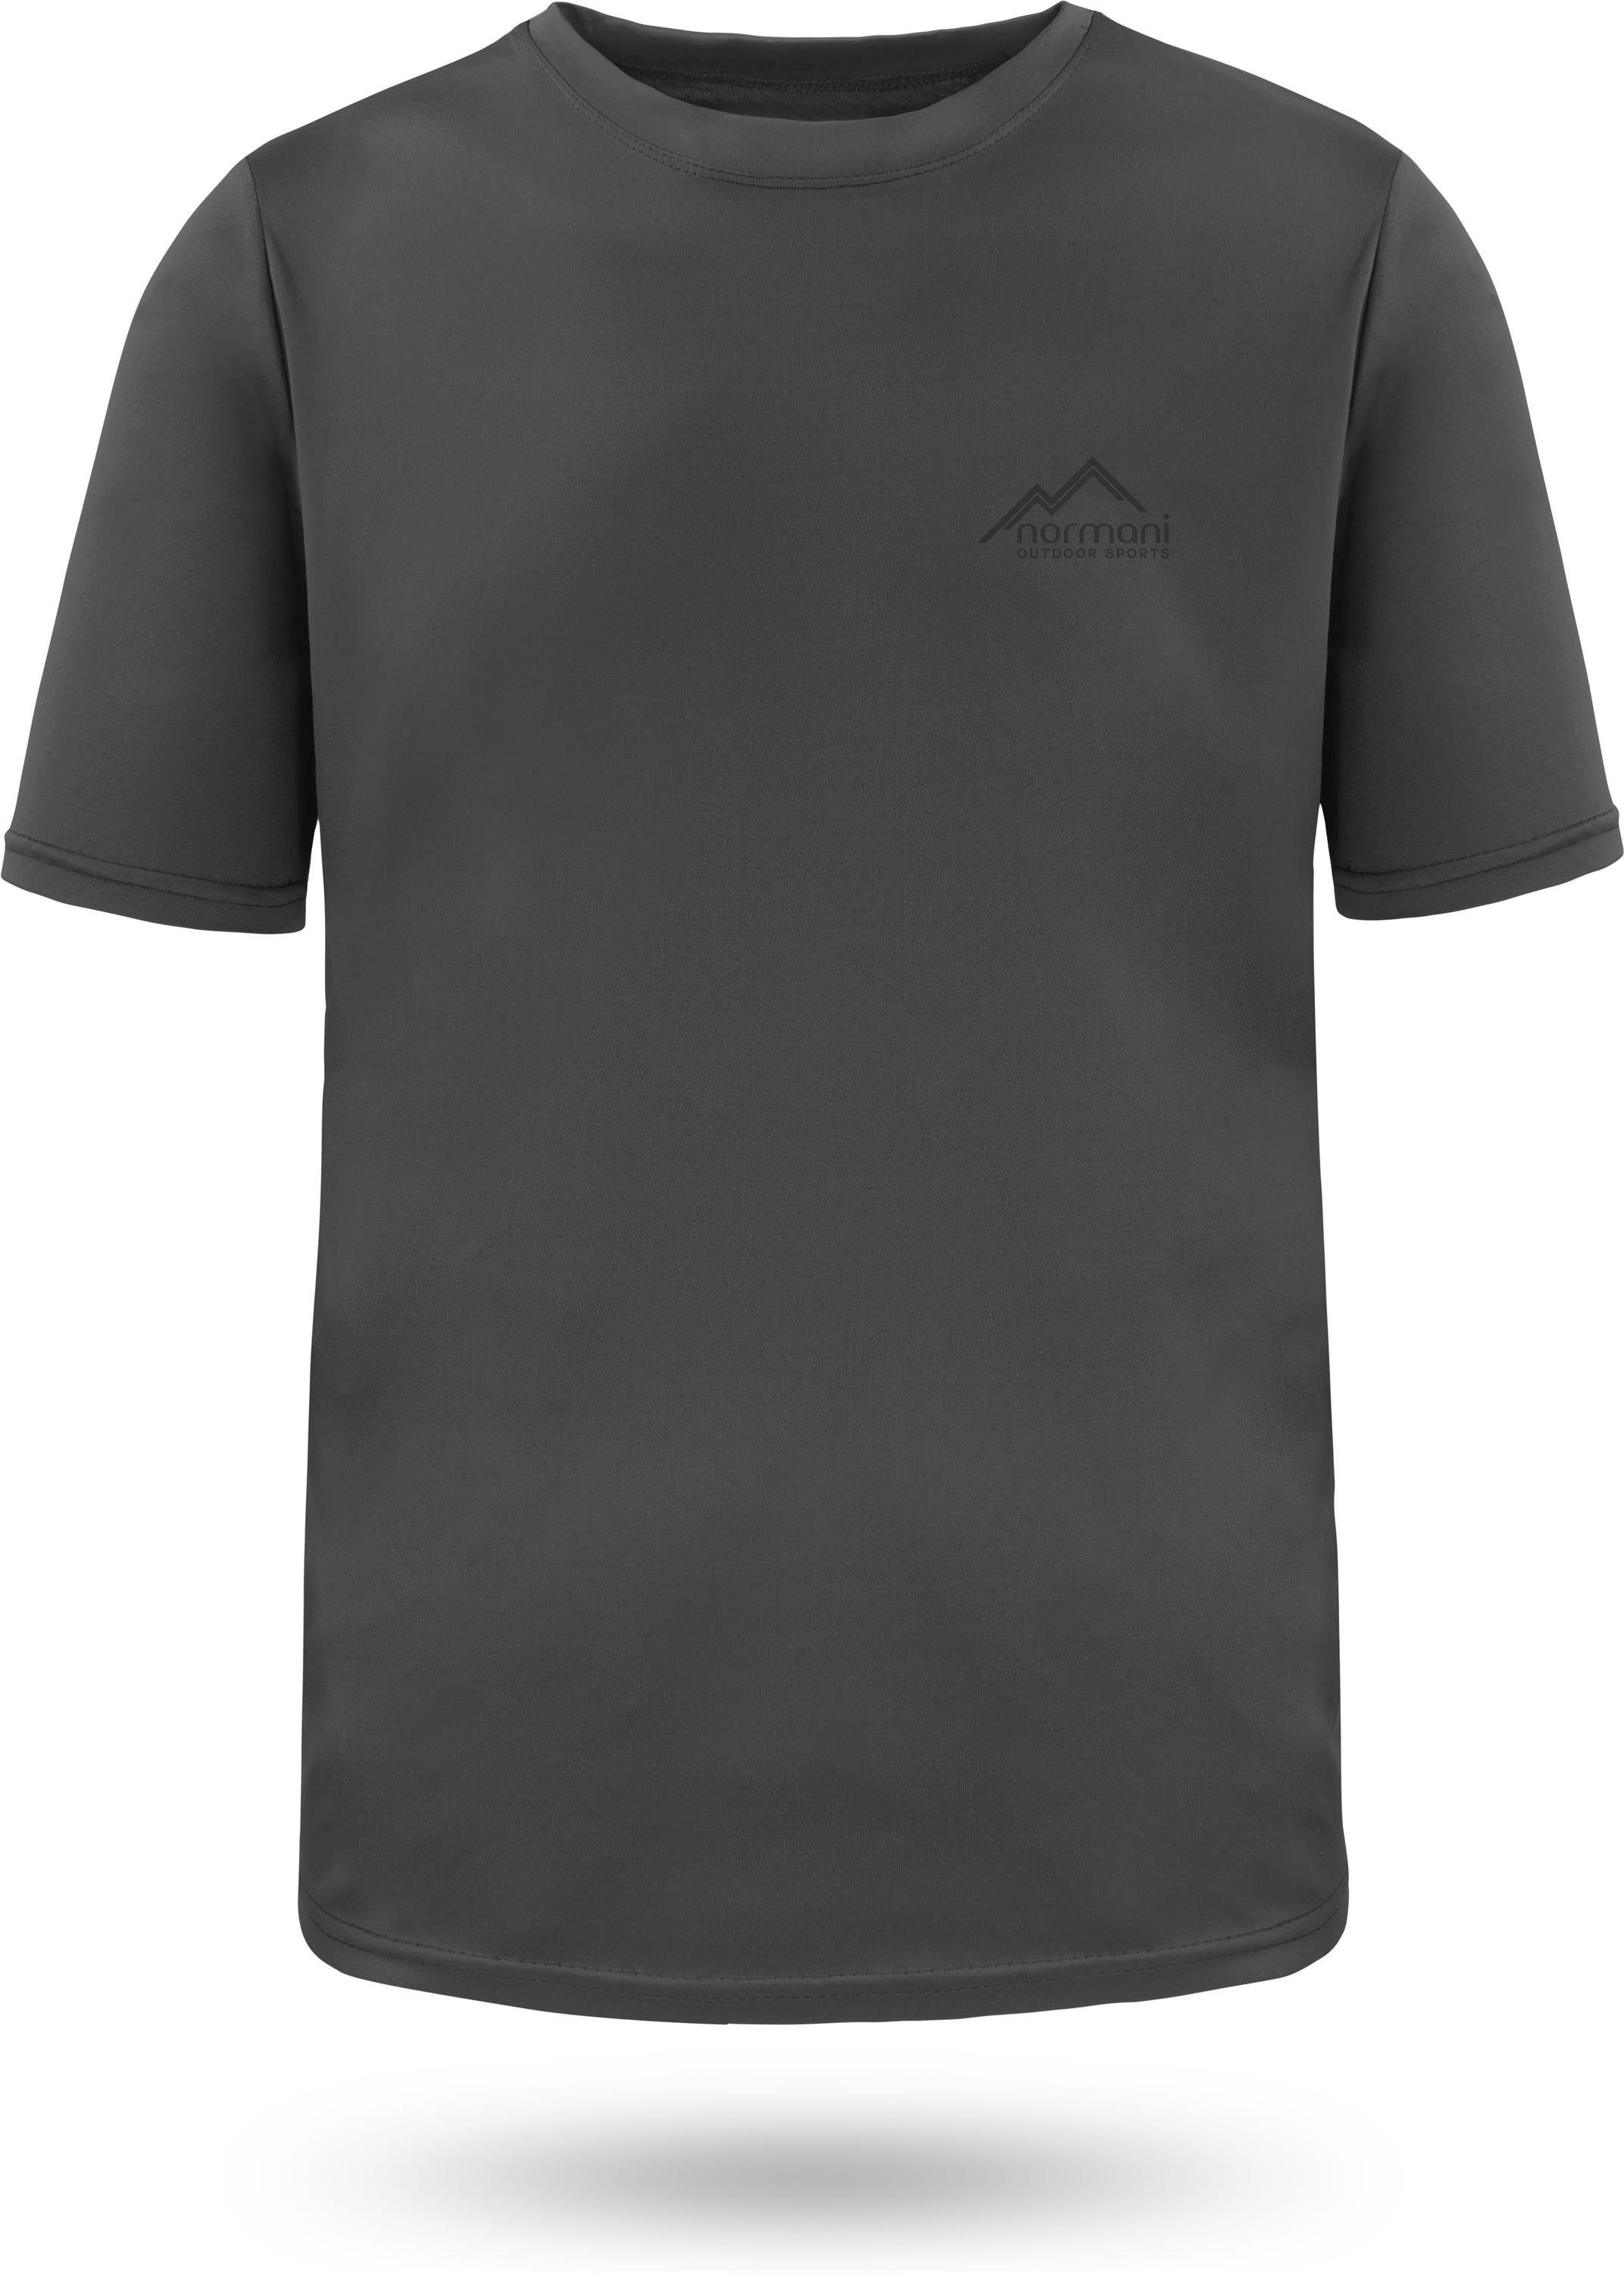 Shirt Funktions-Sport mt normani T-Shirt Cooling-Material Grau Fitness Kurzarm Herren Funktionsshirt Agra Sportswear